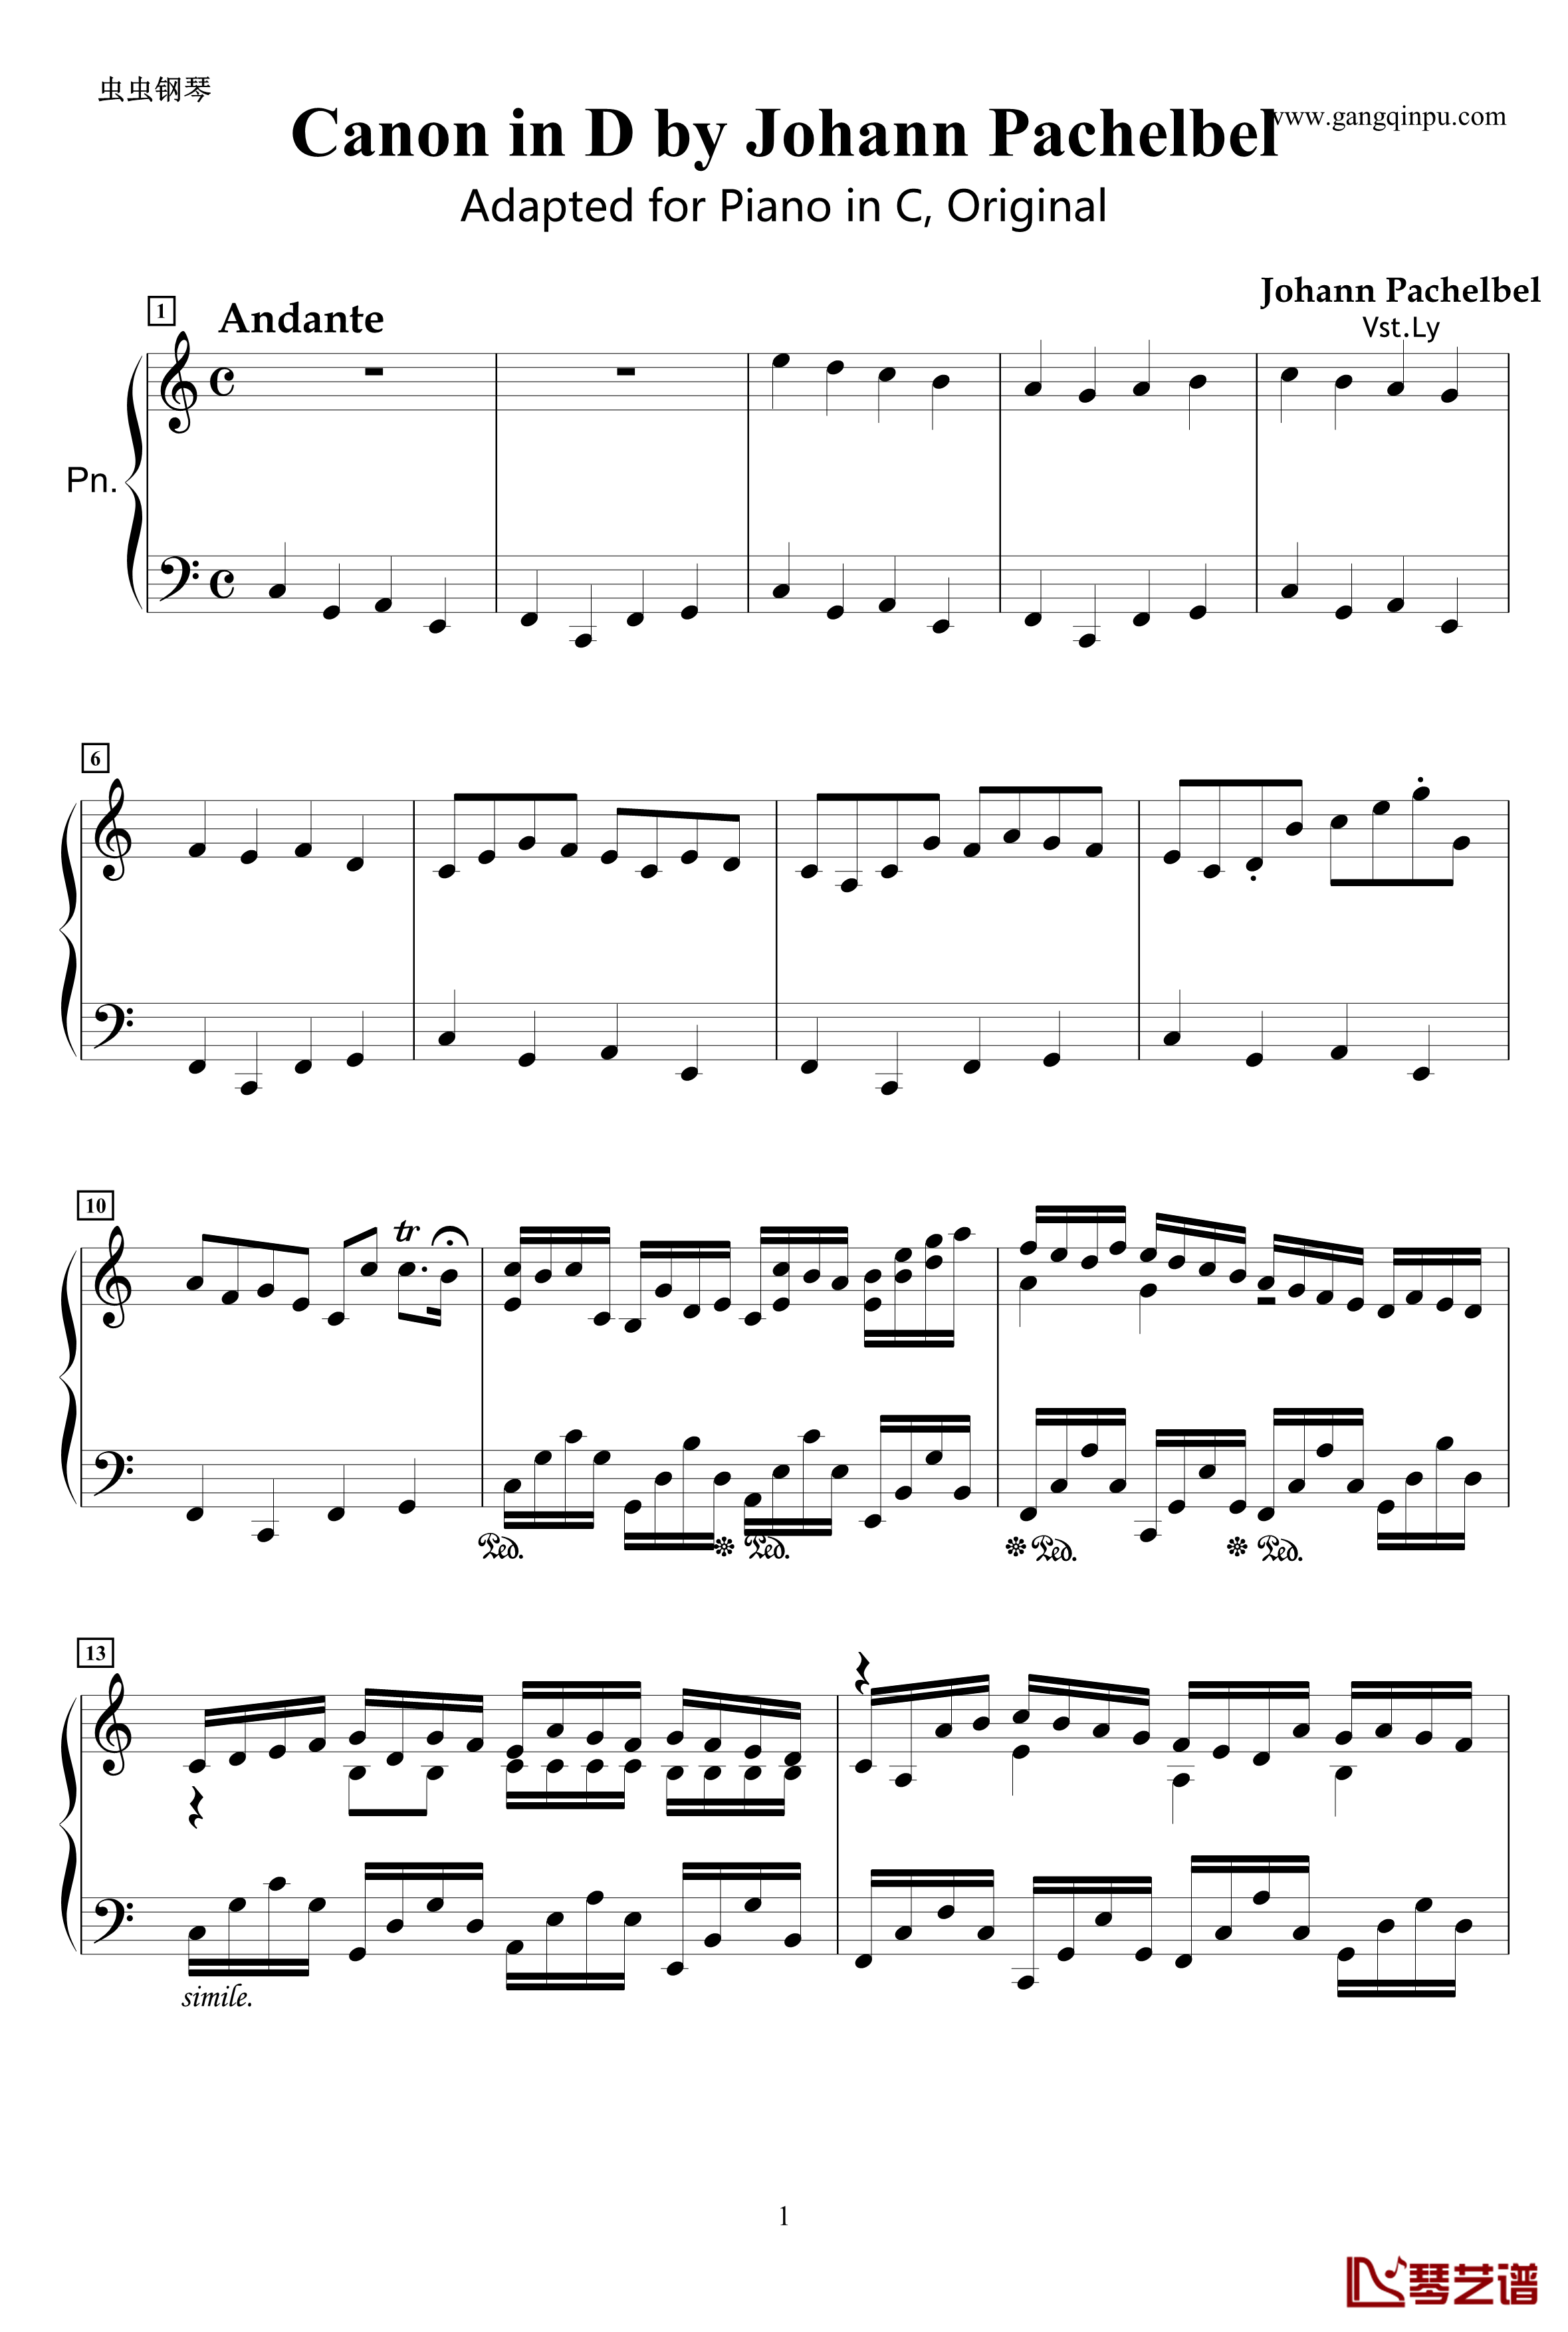 Canon Adapted for Piano, Original钢琴谱-卡农巴洛克原版的钢琴变奏-Johann Pachelbel1